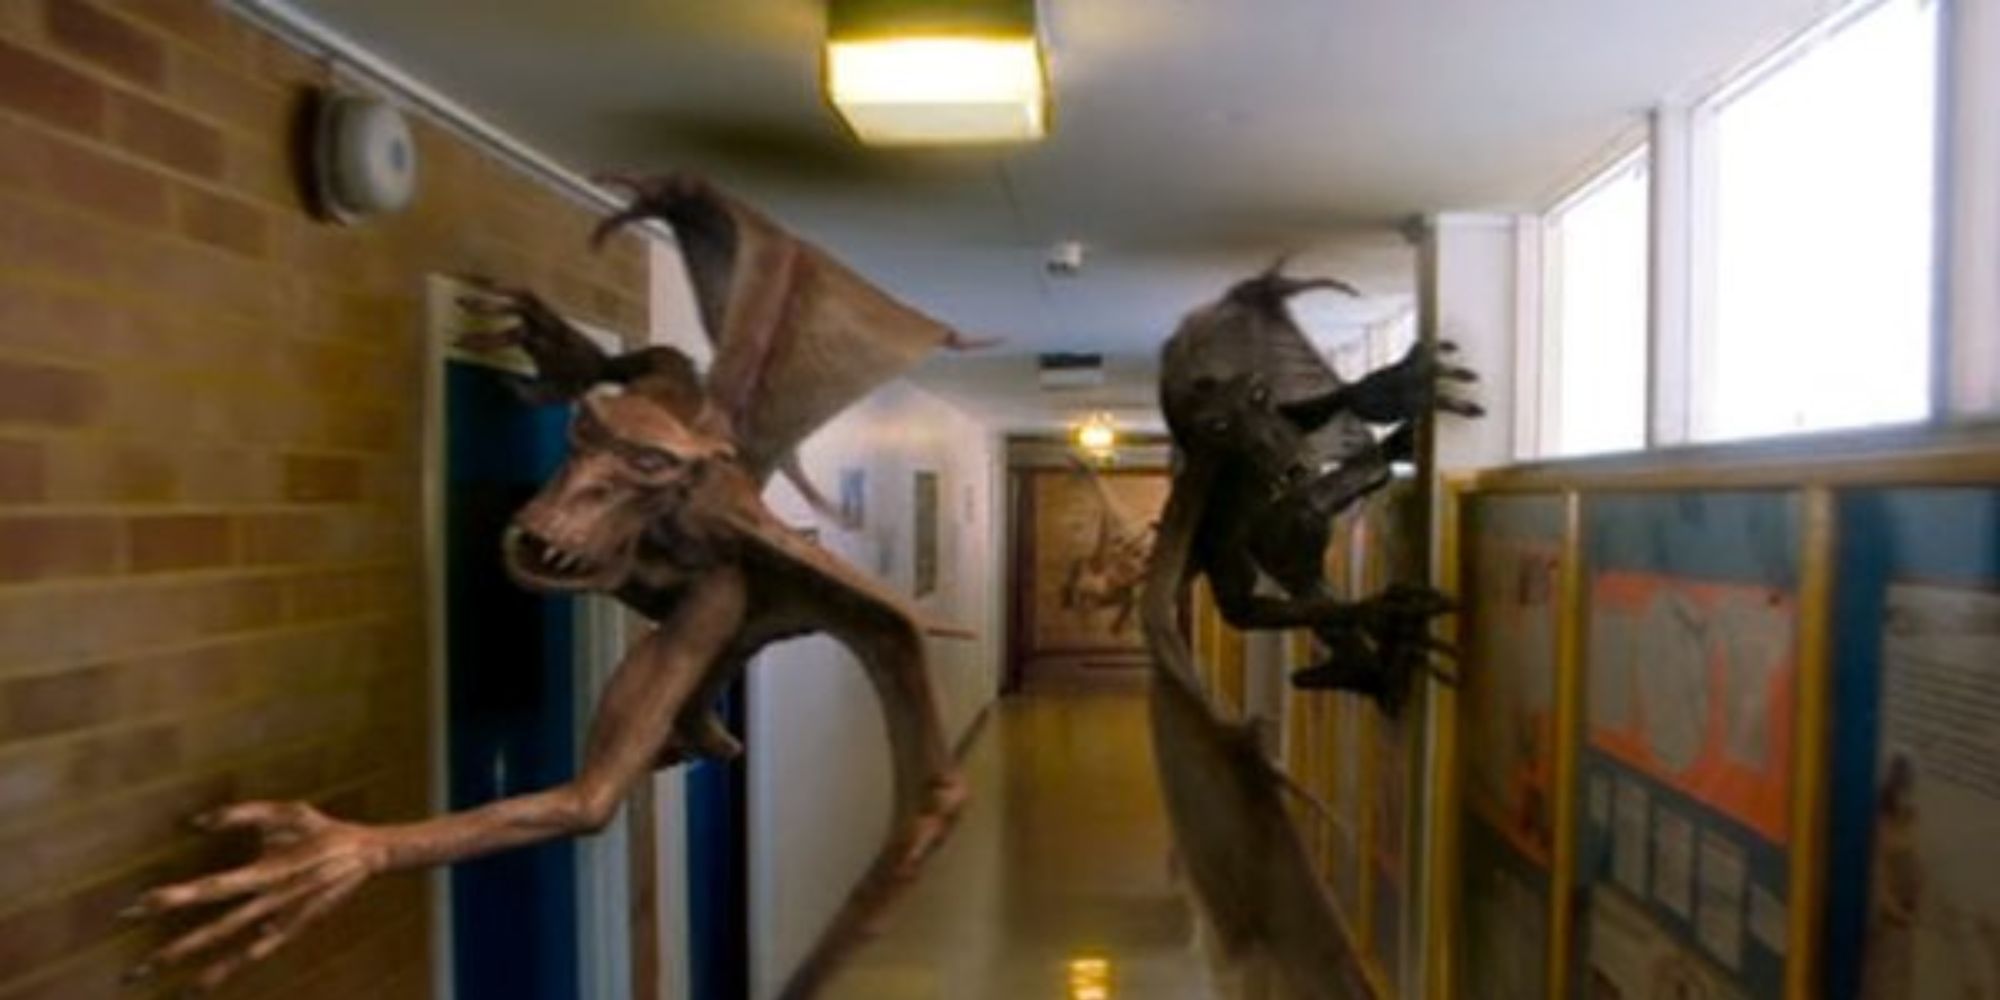 A bat-like creature crawling through the corridor